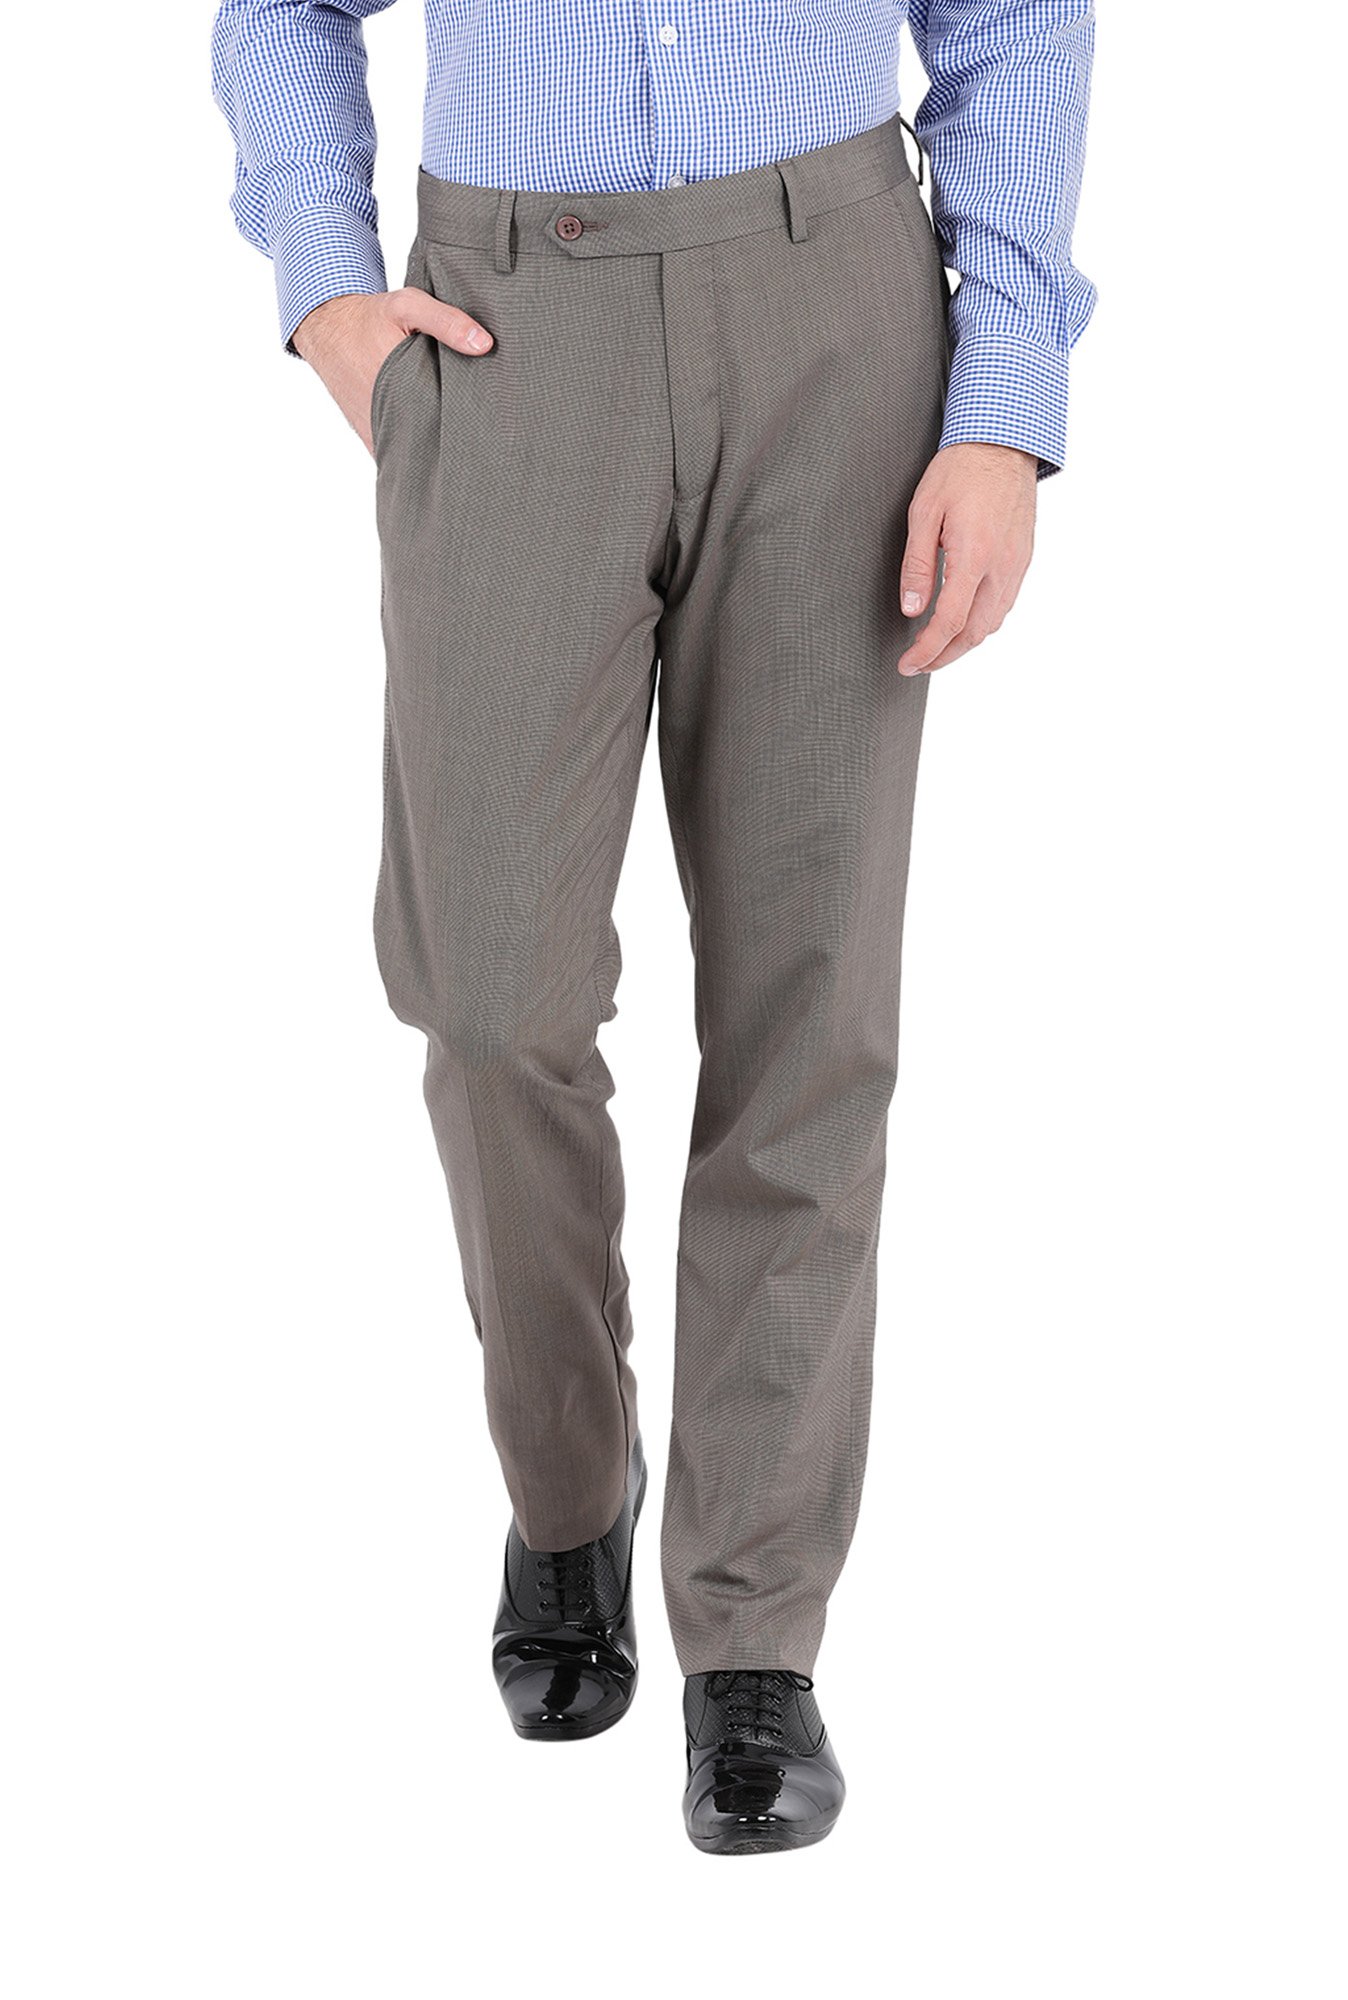 Buy Khaki Trousers  Pants for Men by JOHN PLAYERS Online  Ajiocom